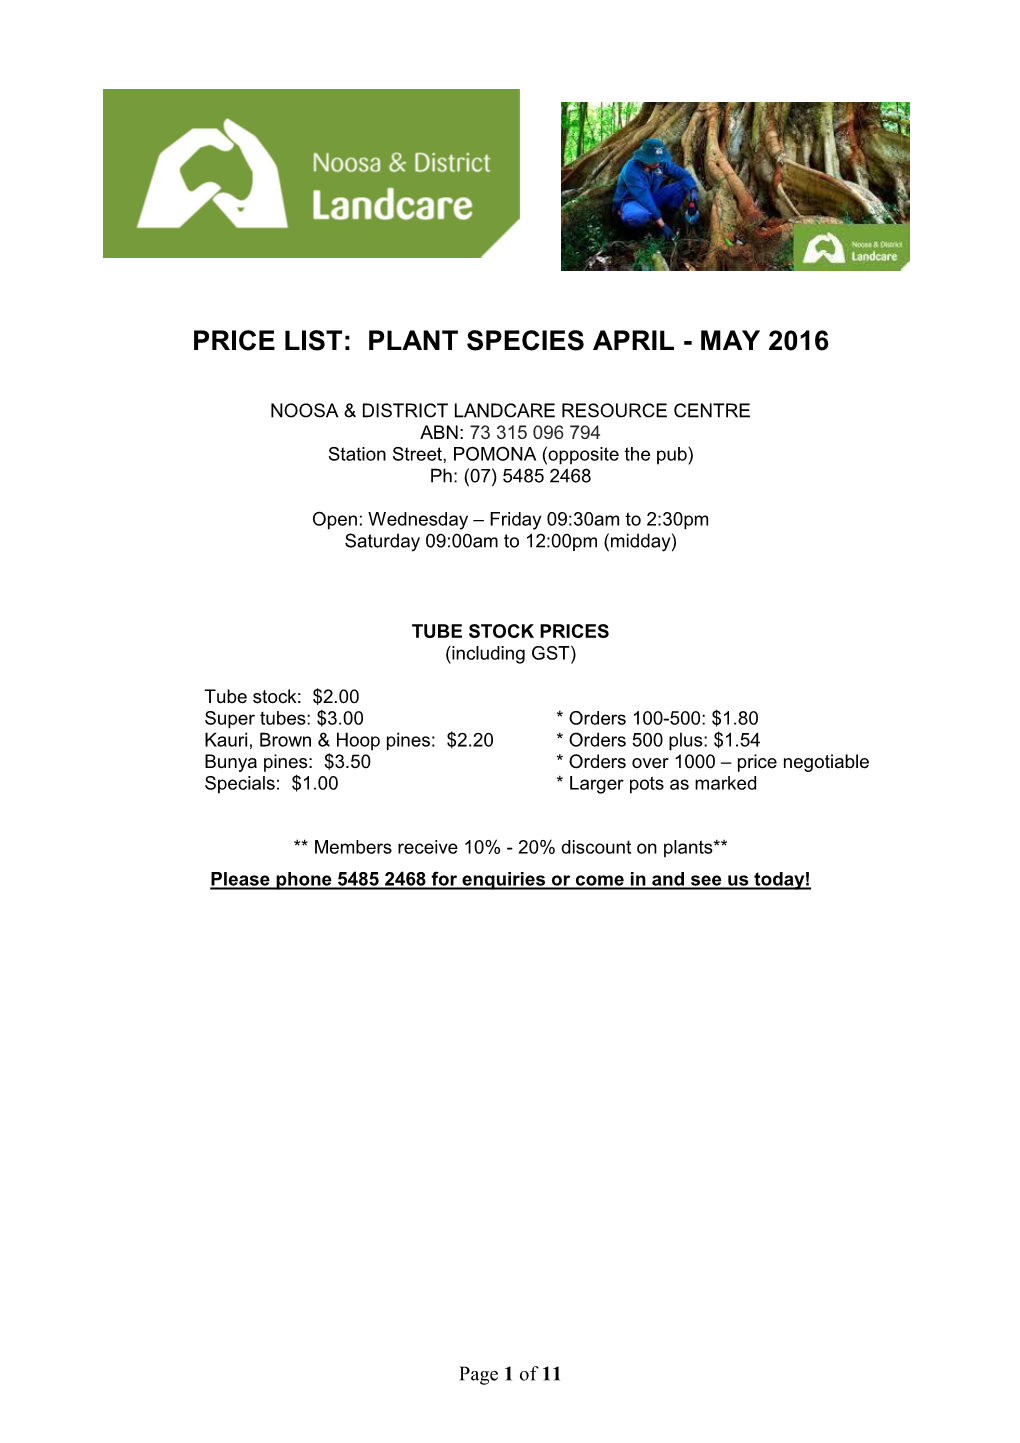 Price List: Plant Species April - May 2016